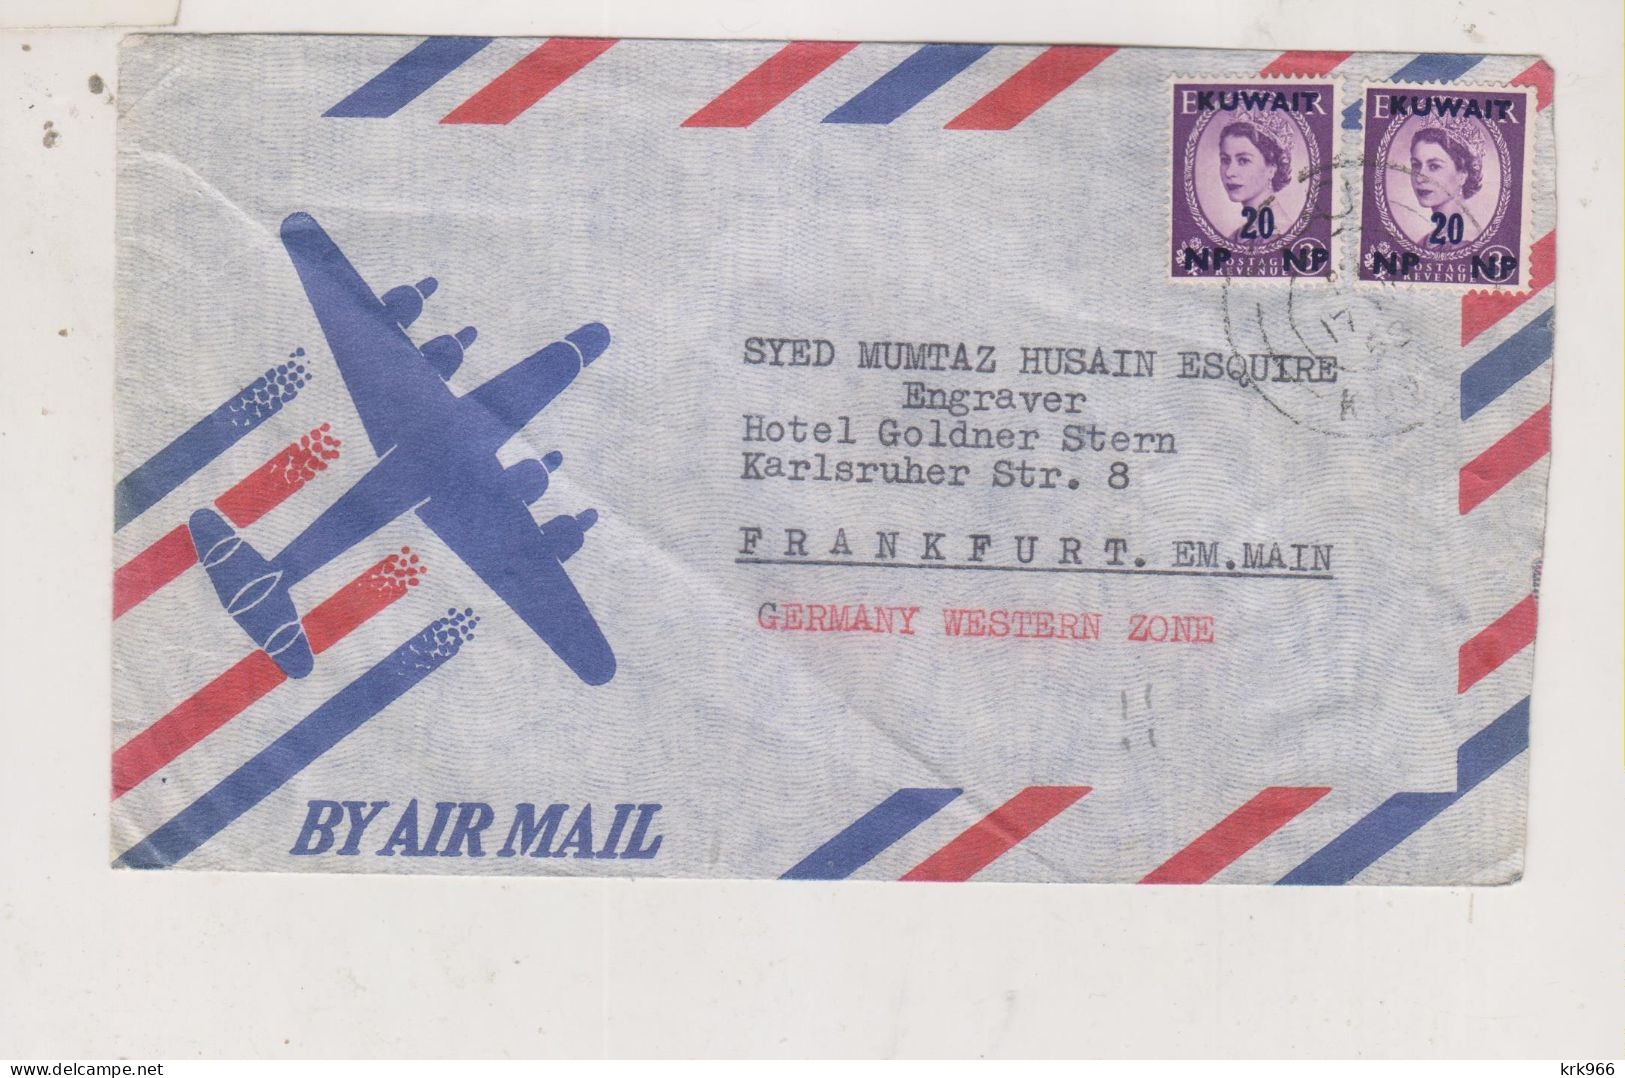 KUWAIT 1958 Airmail Cover To GERMANY - Kuwait